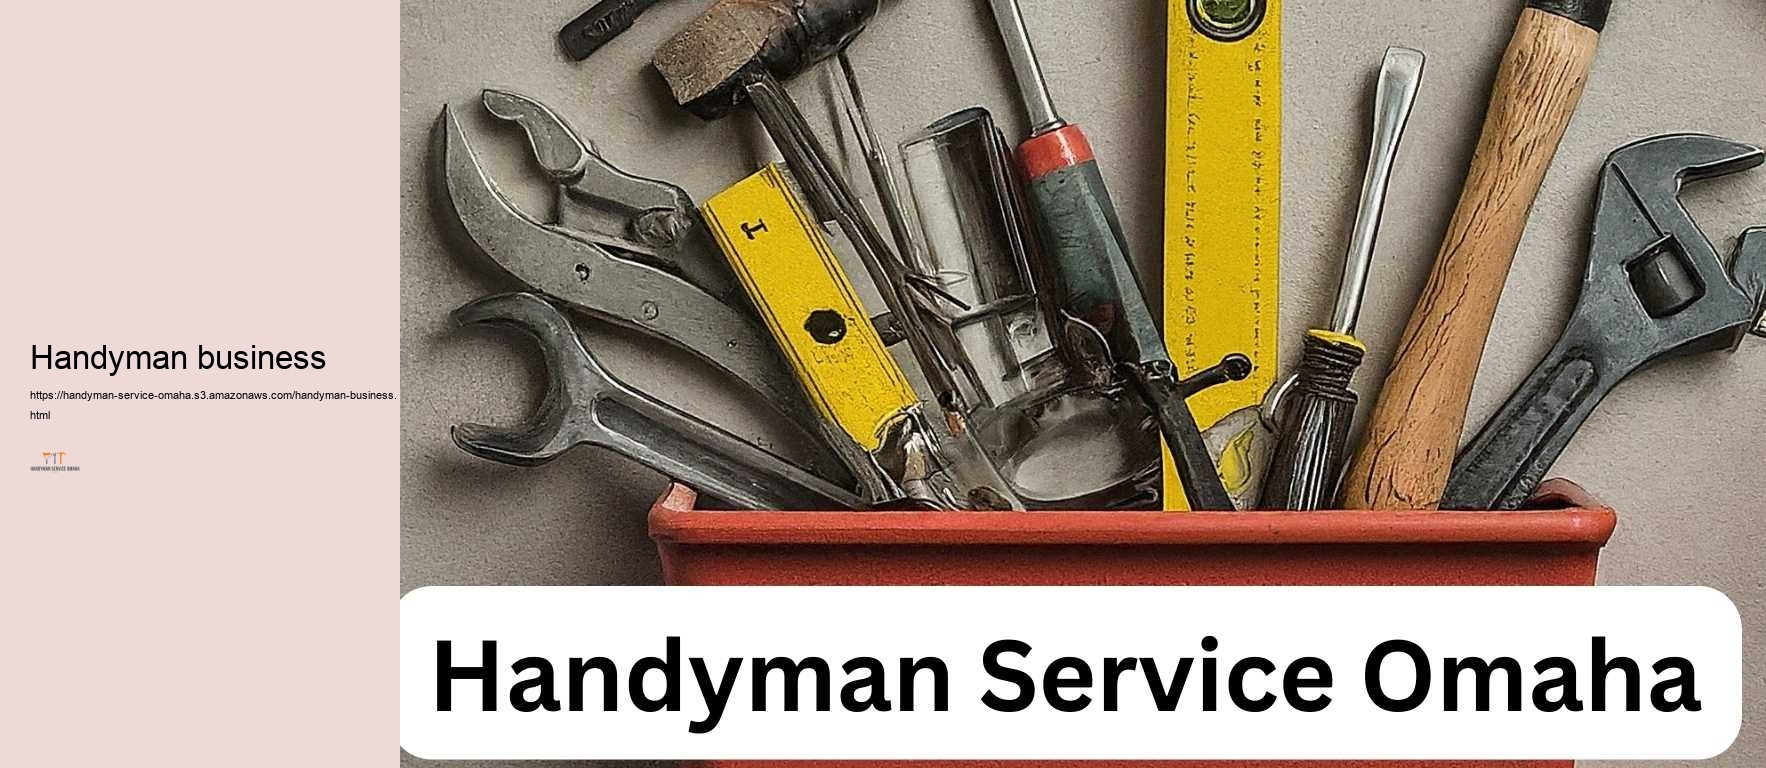 Handyman business